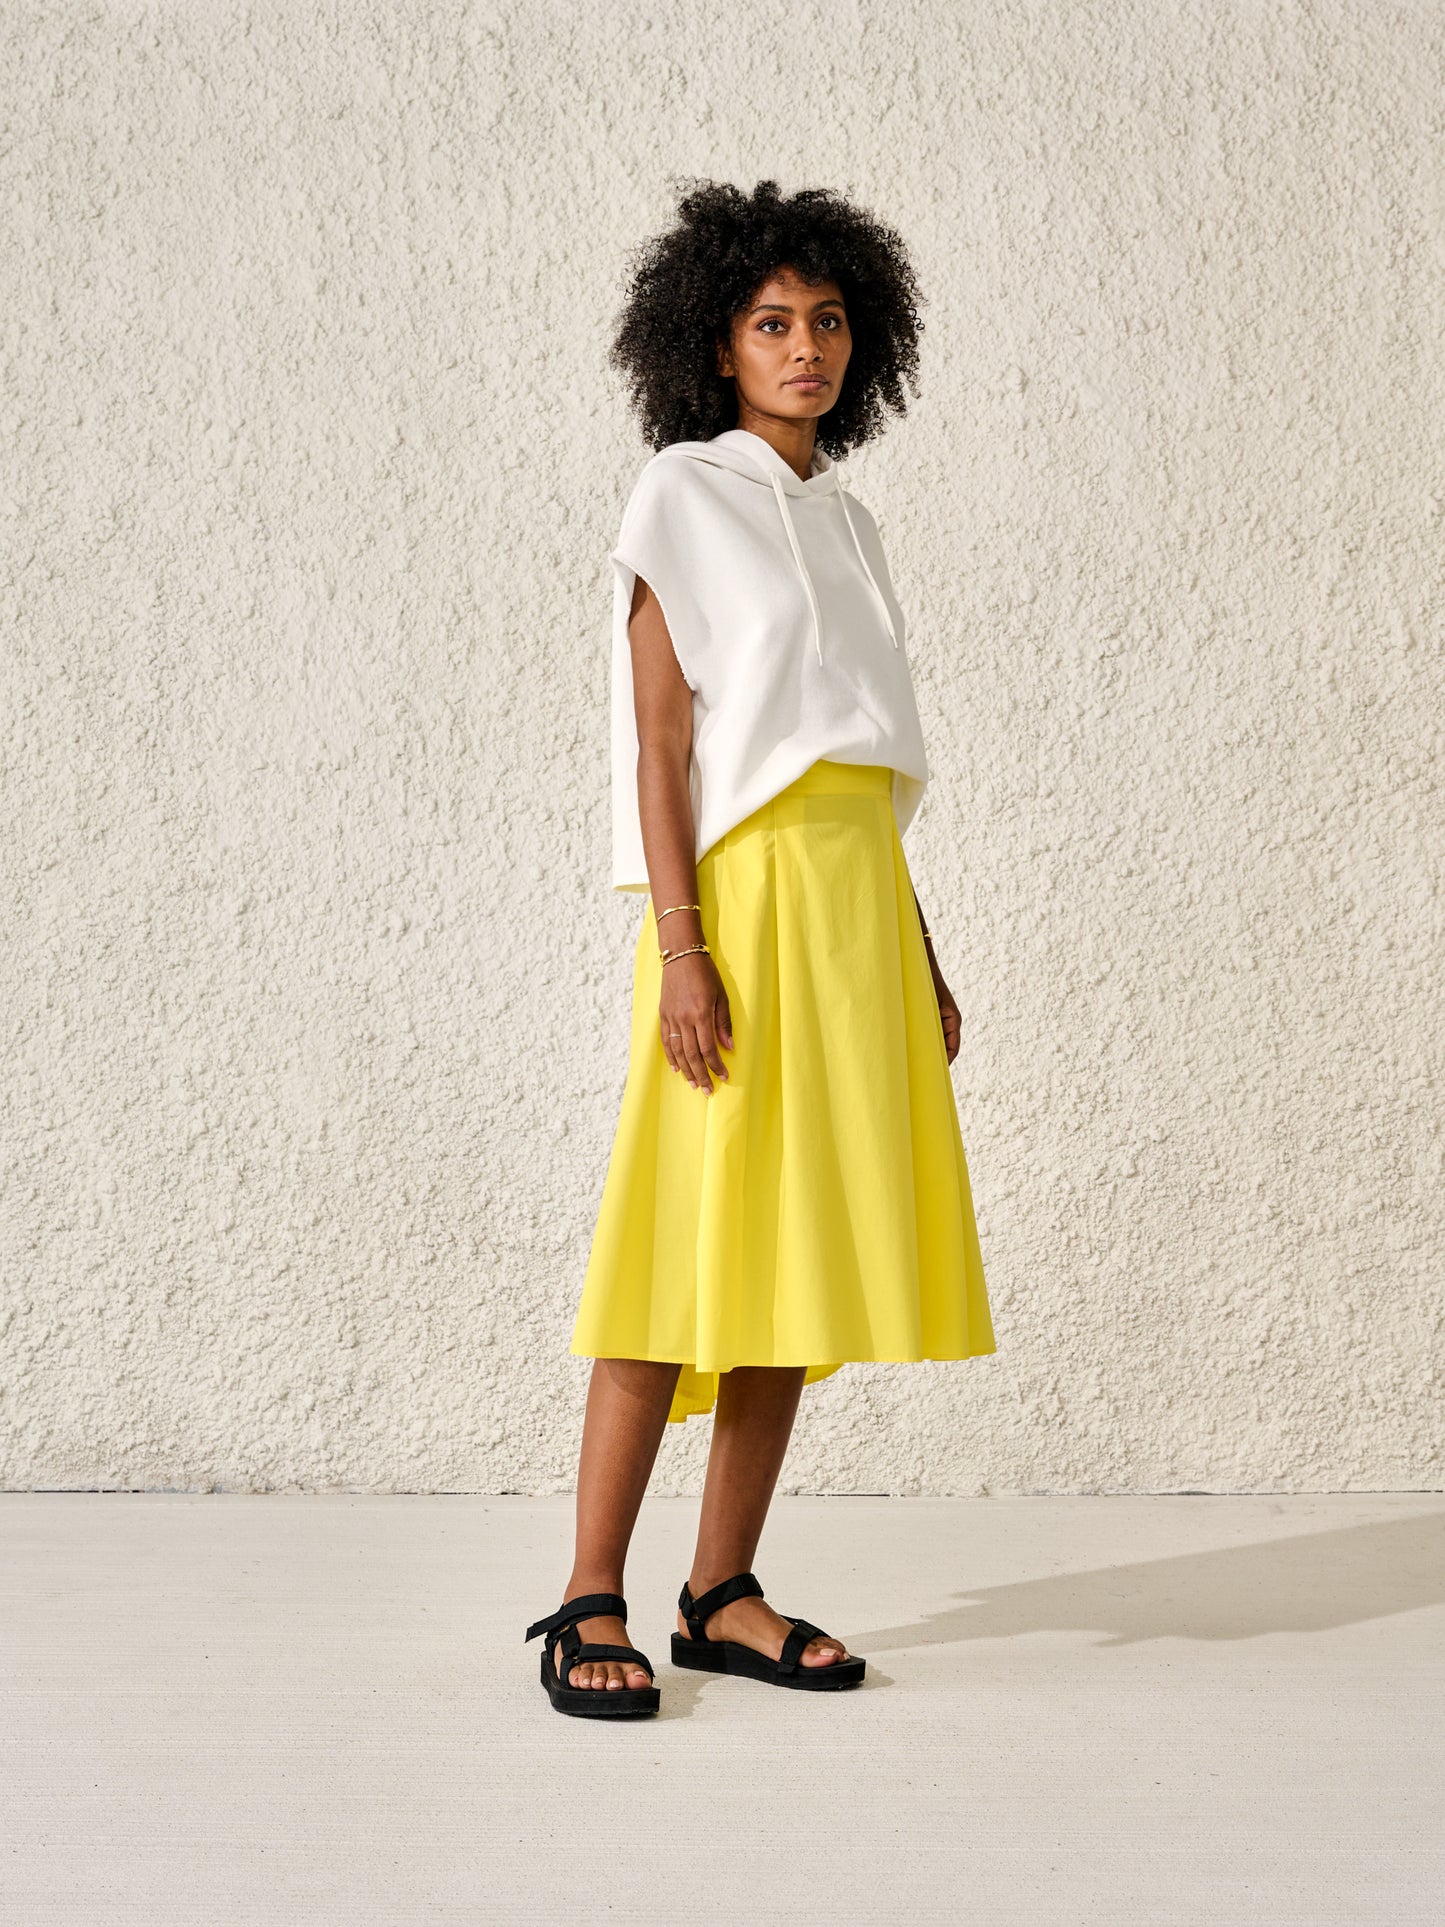 Bellerose - Pacific Skirt: Illuminating